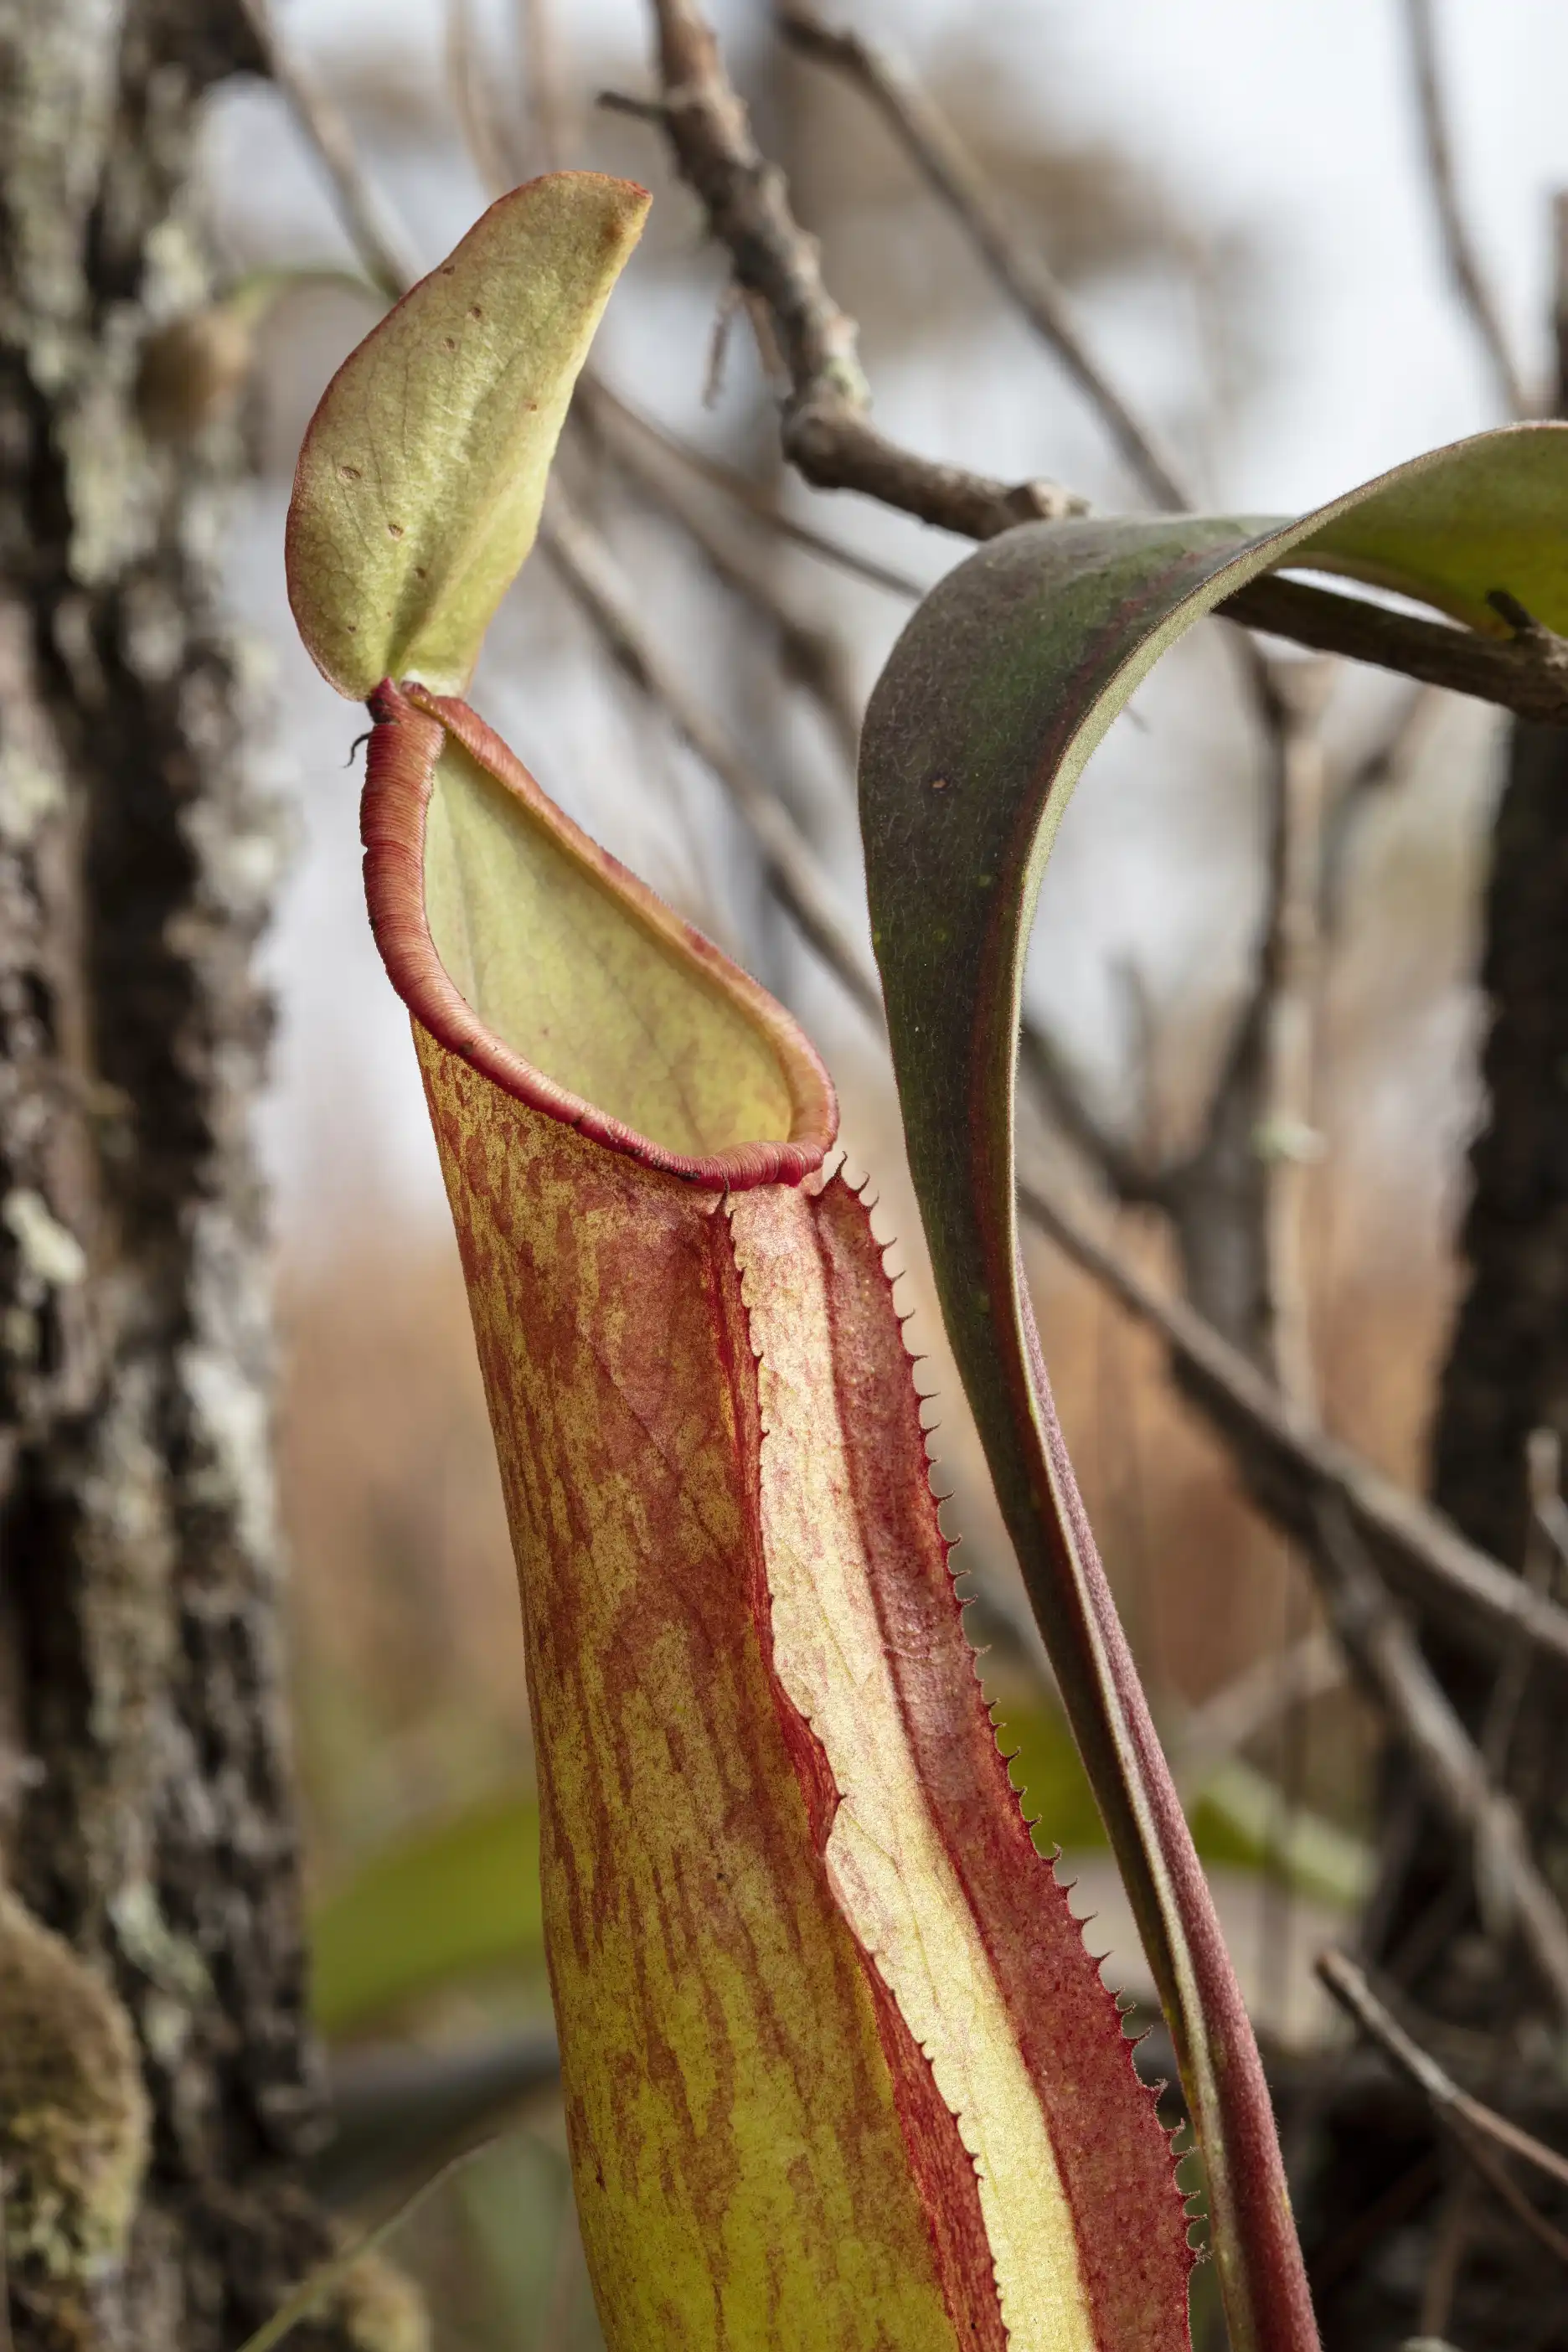 Nepenthes smilesii pitcher